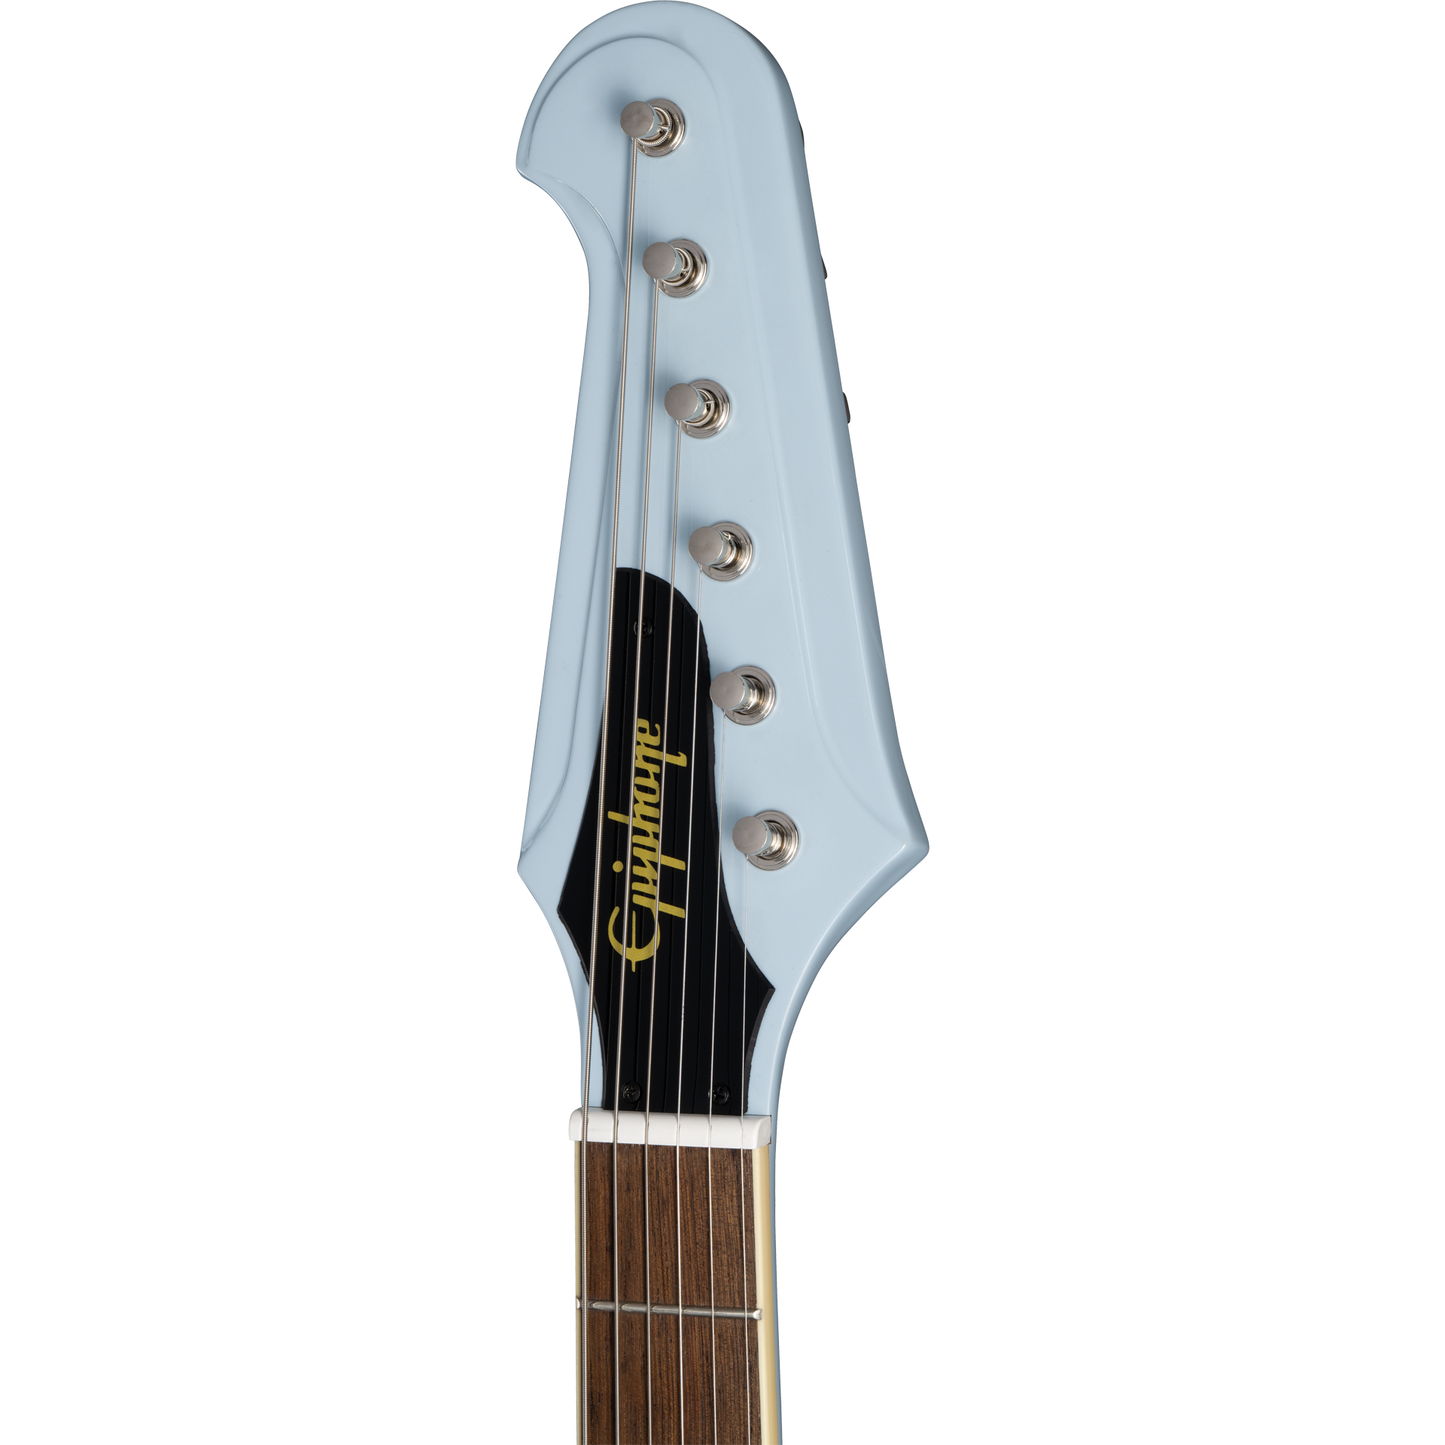 Epiphone 1963 Firebird V Electric Guitar - Frost Blue